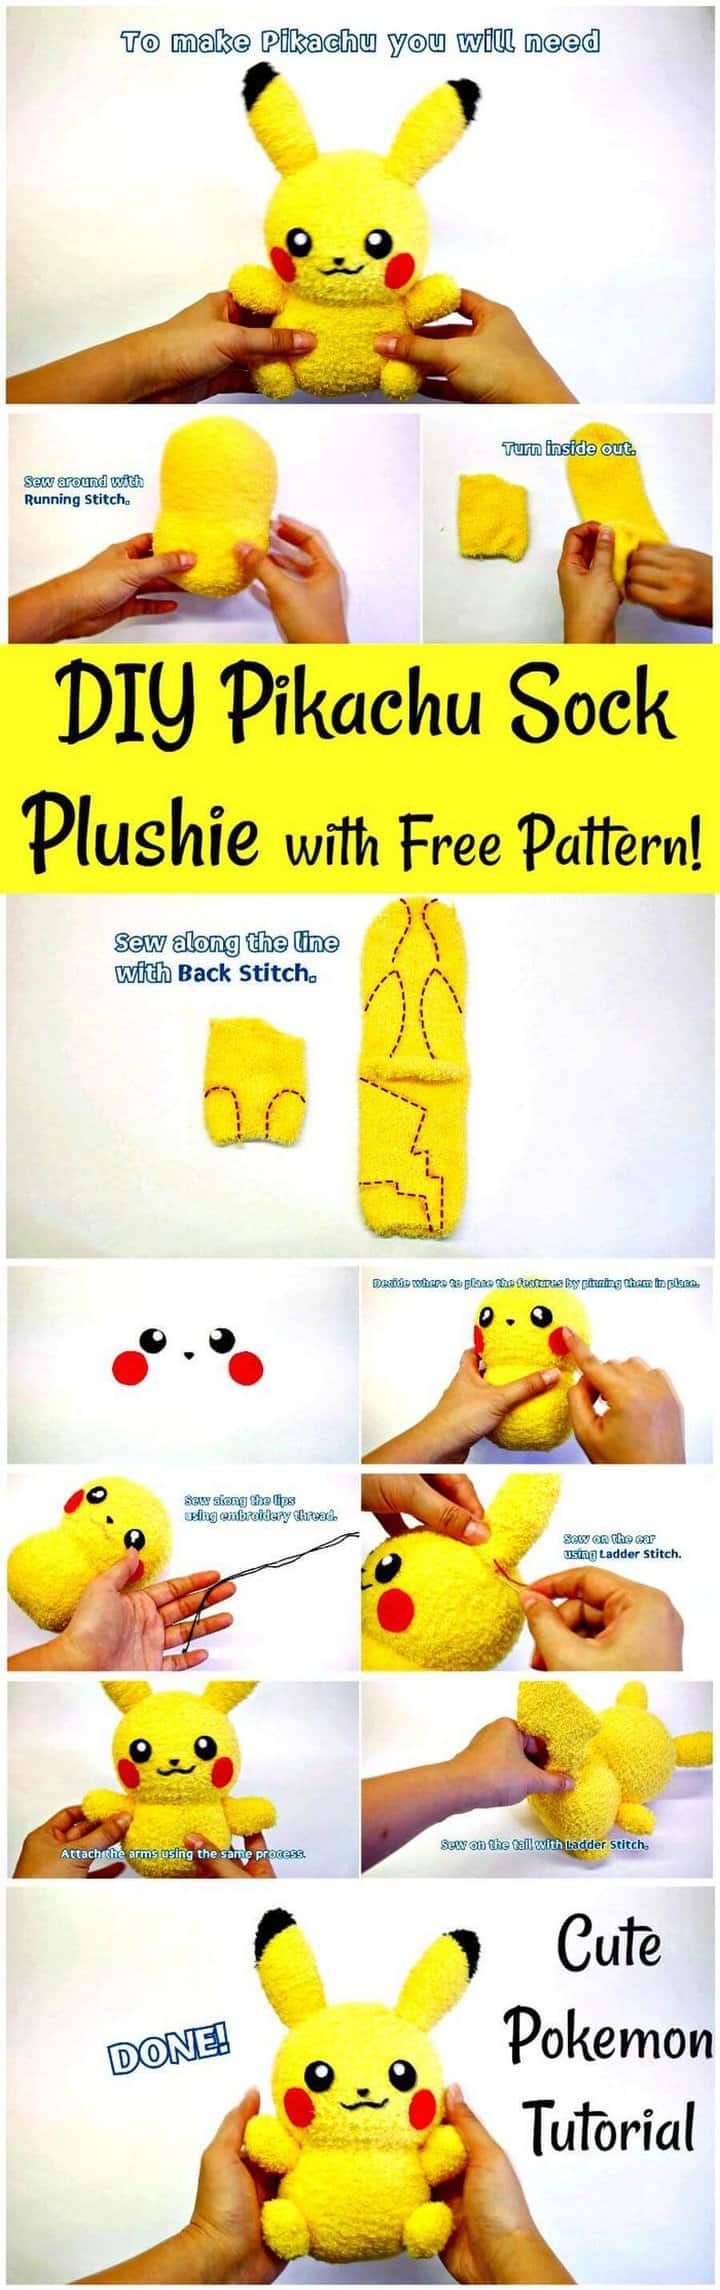 DIY-Pikachu-Sock-Plushie-with-Free-Pattern-Cute-Pokemon-Tutorial